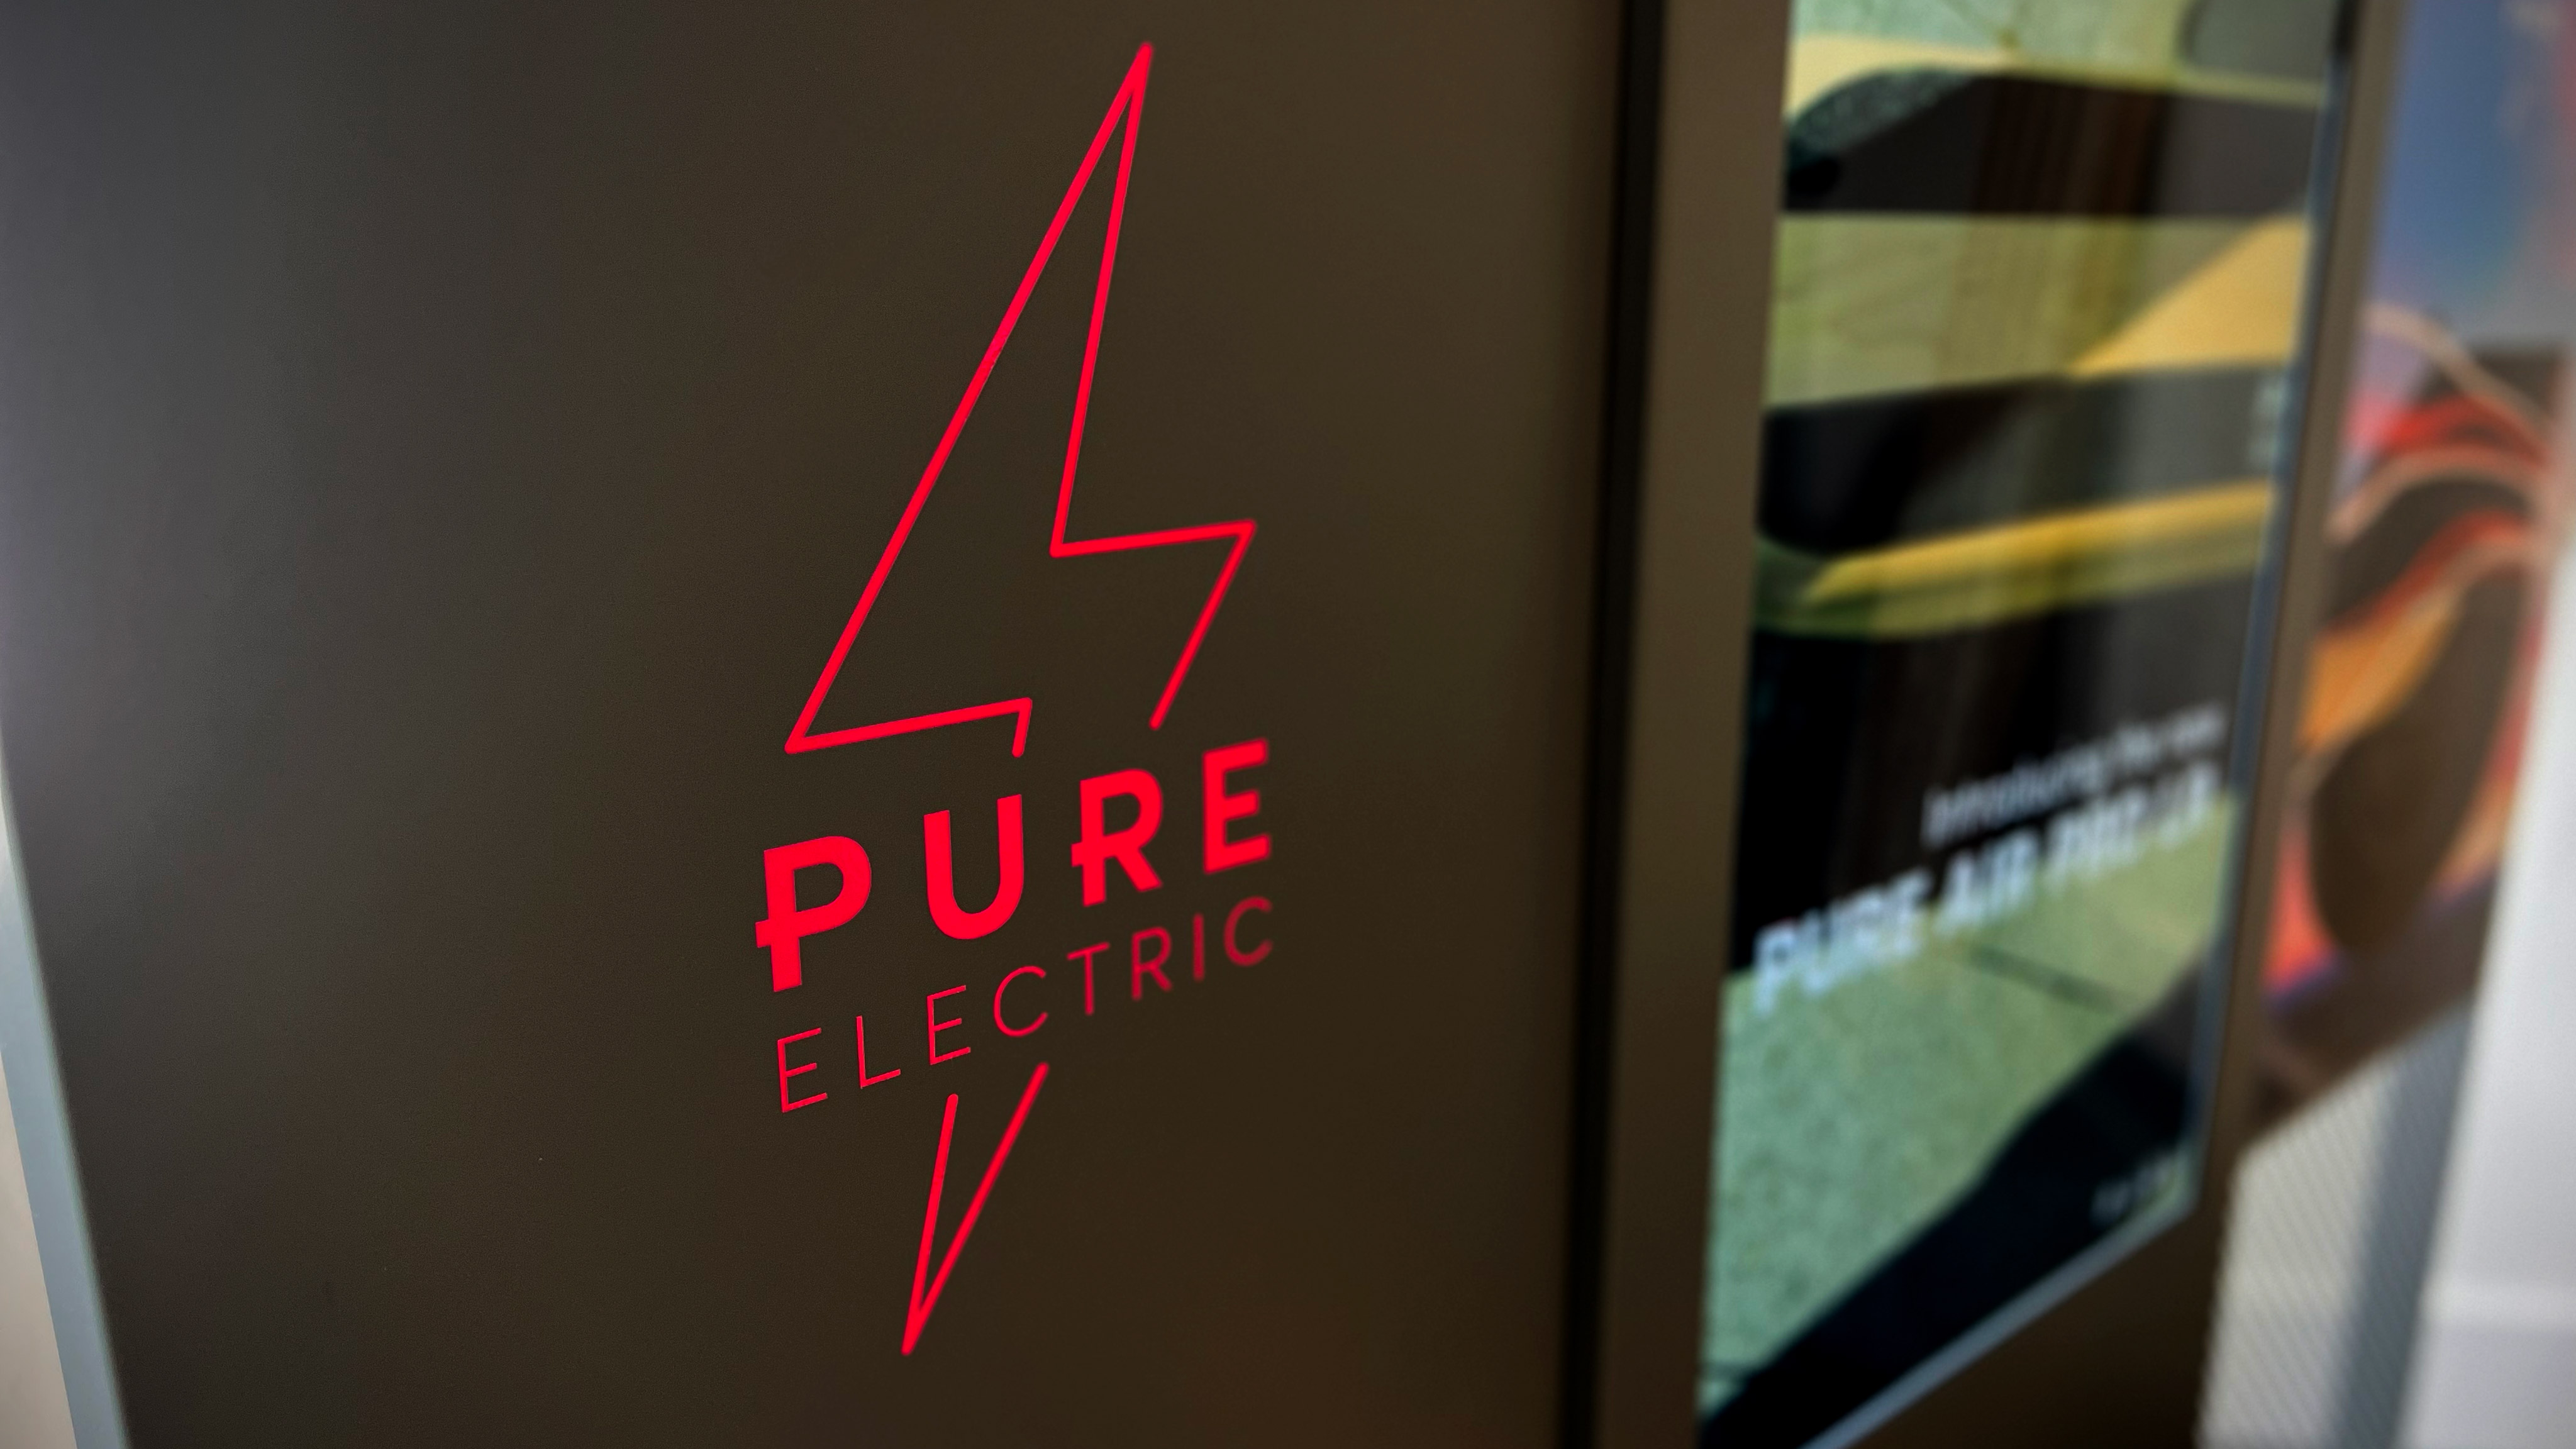 PURE-ELECTRIC illuminated graphic installation display interior retail design and installation - Attero Retail Design Agency